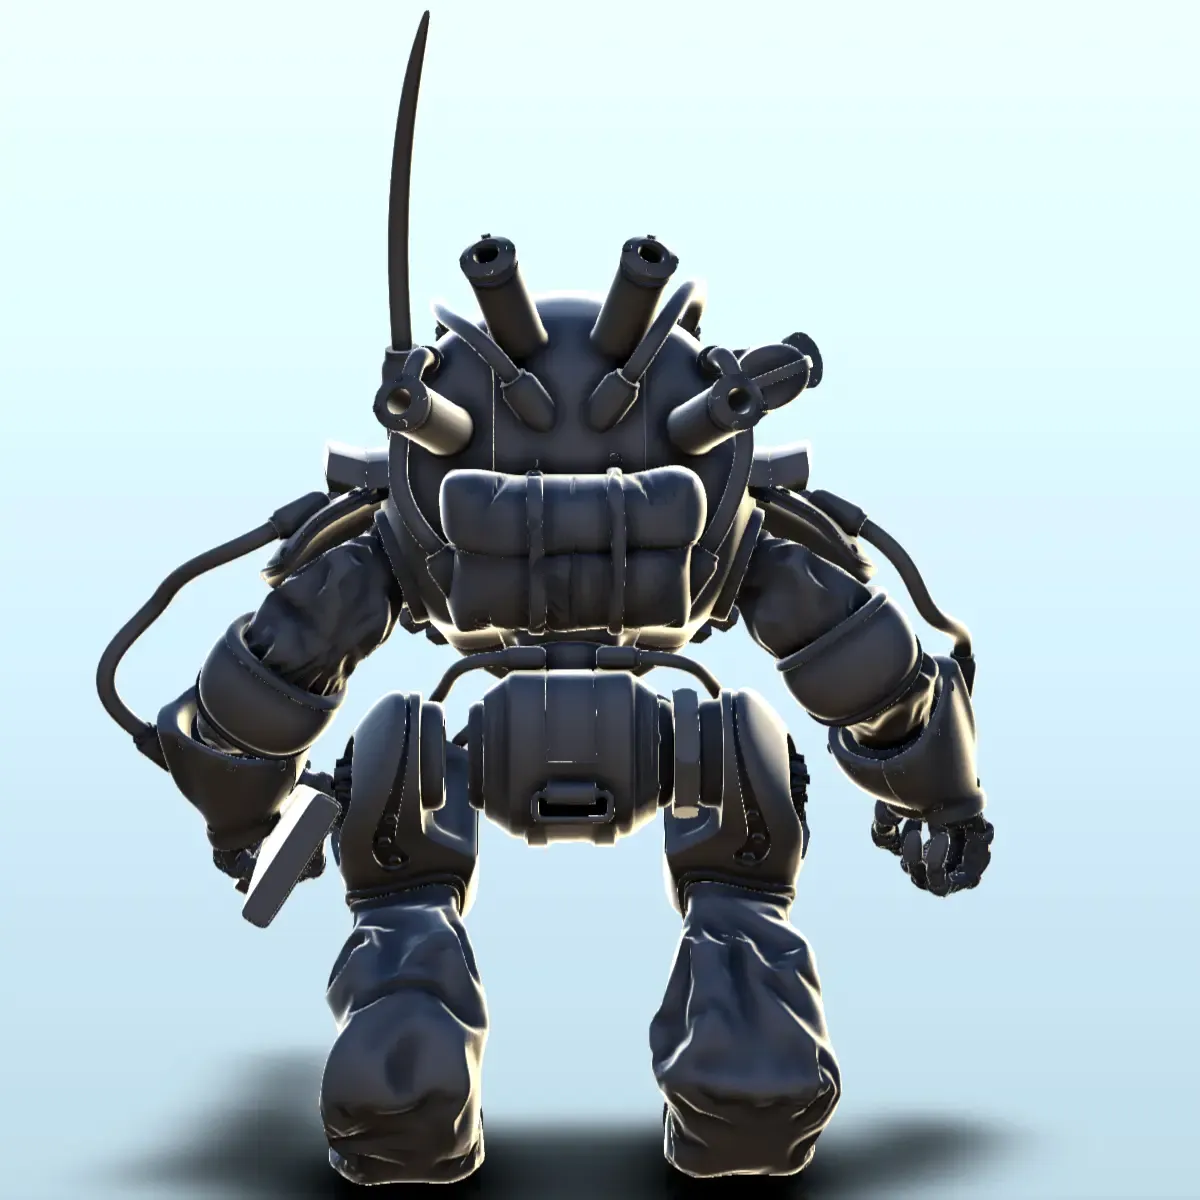 Qheone combat robot (27) - sci-fi science fiction future 40k